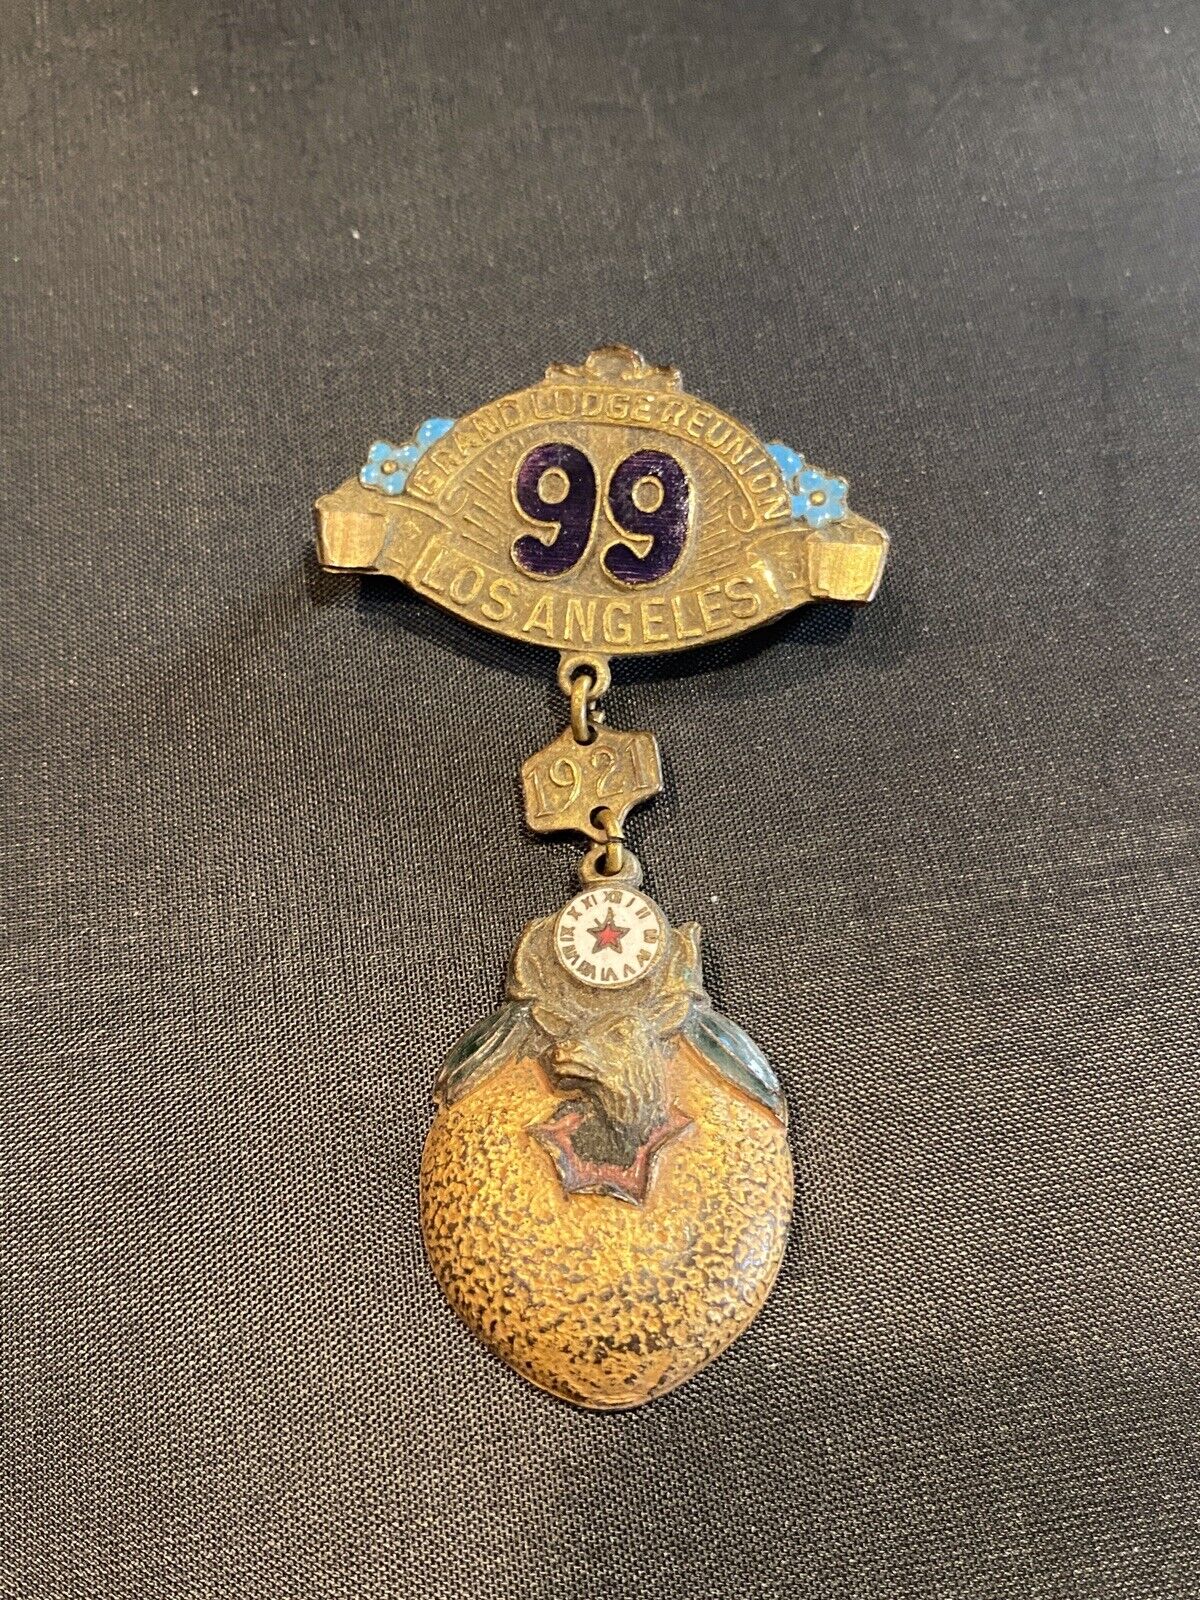 Nice 1921 BPOE ELKS GRAND LODGE REUNION Los Angeles Lodge No. 99 Brass Badge Pin